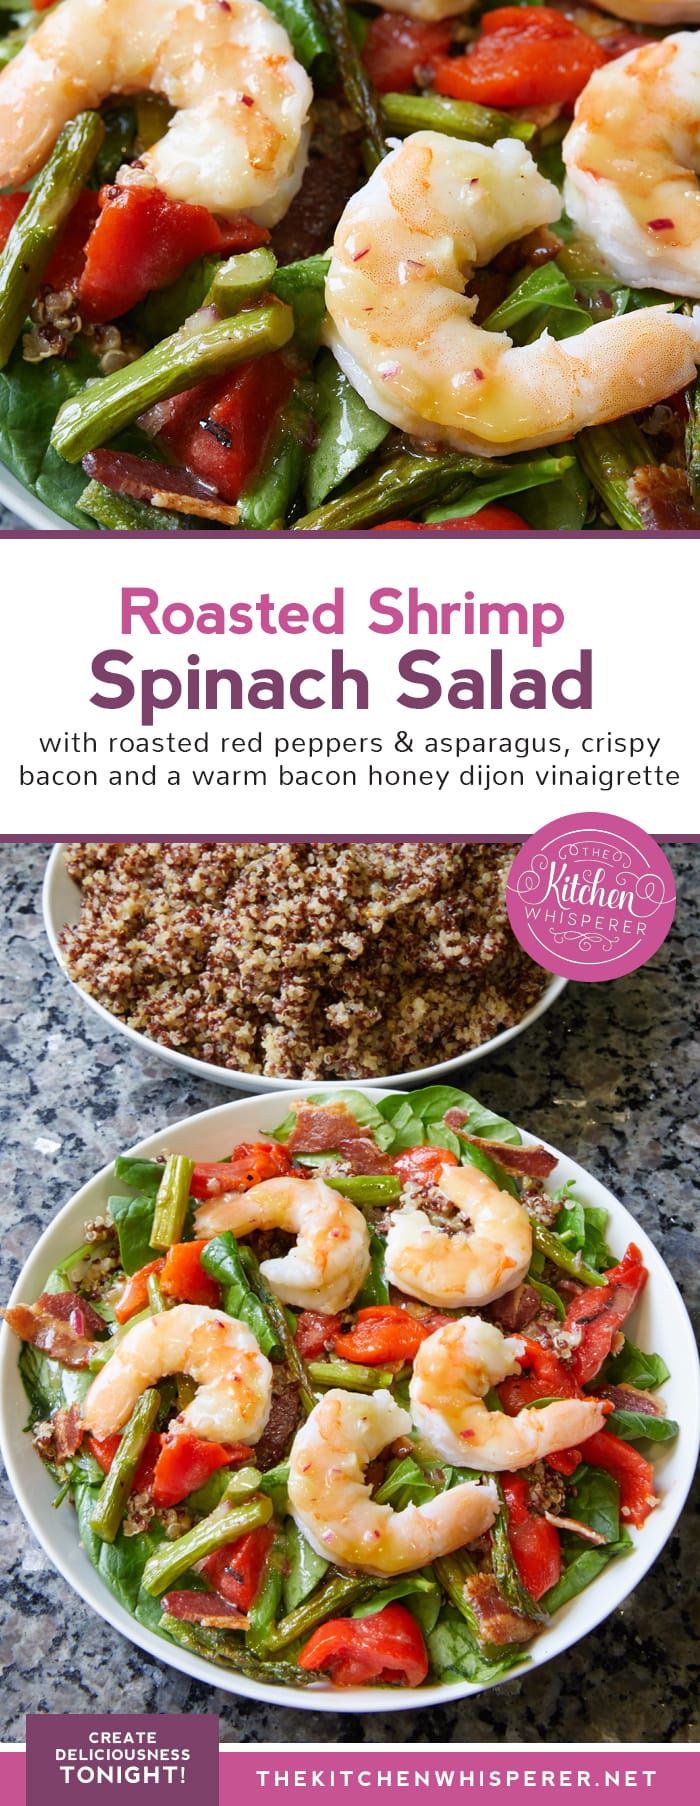 Roasted Shrimp Spinach Salad with Warm Bacon Honey Dijon Vinaigrette!